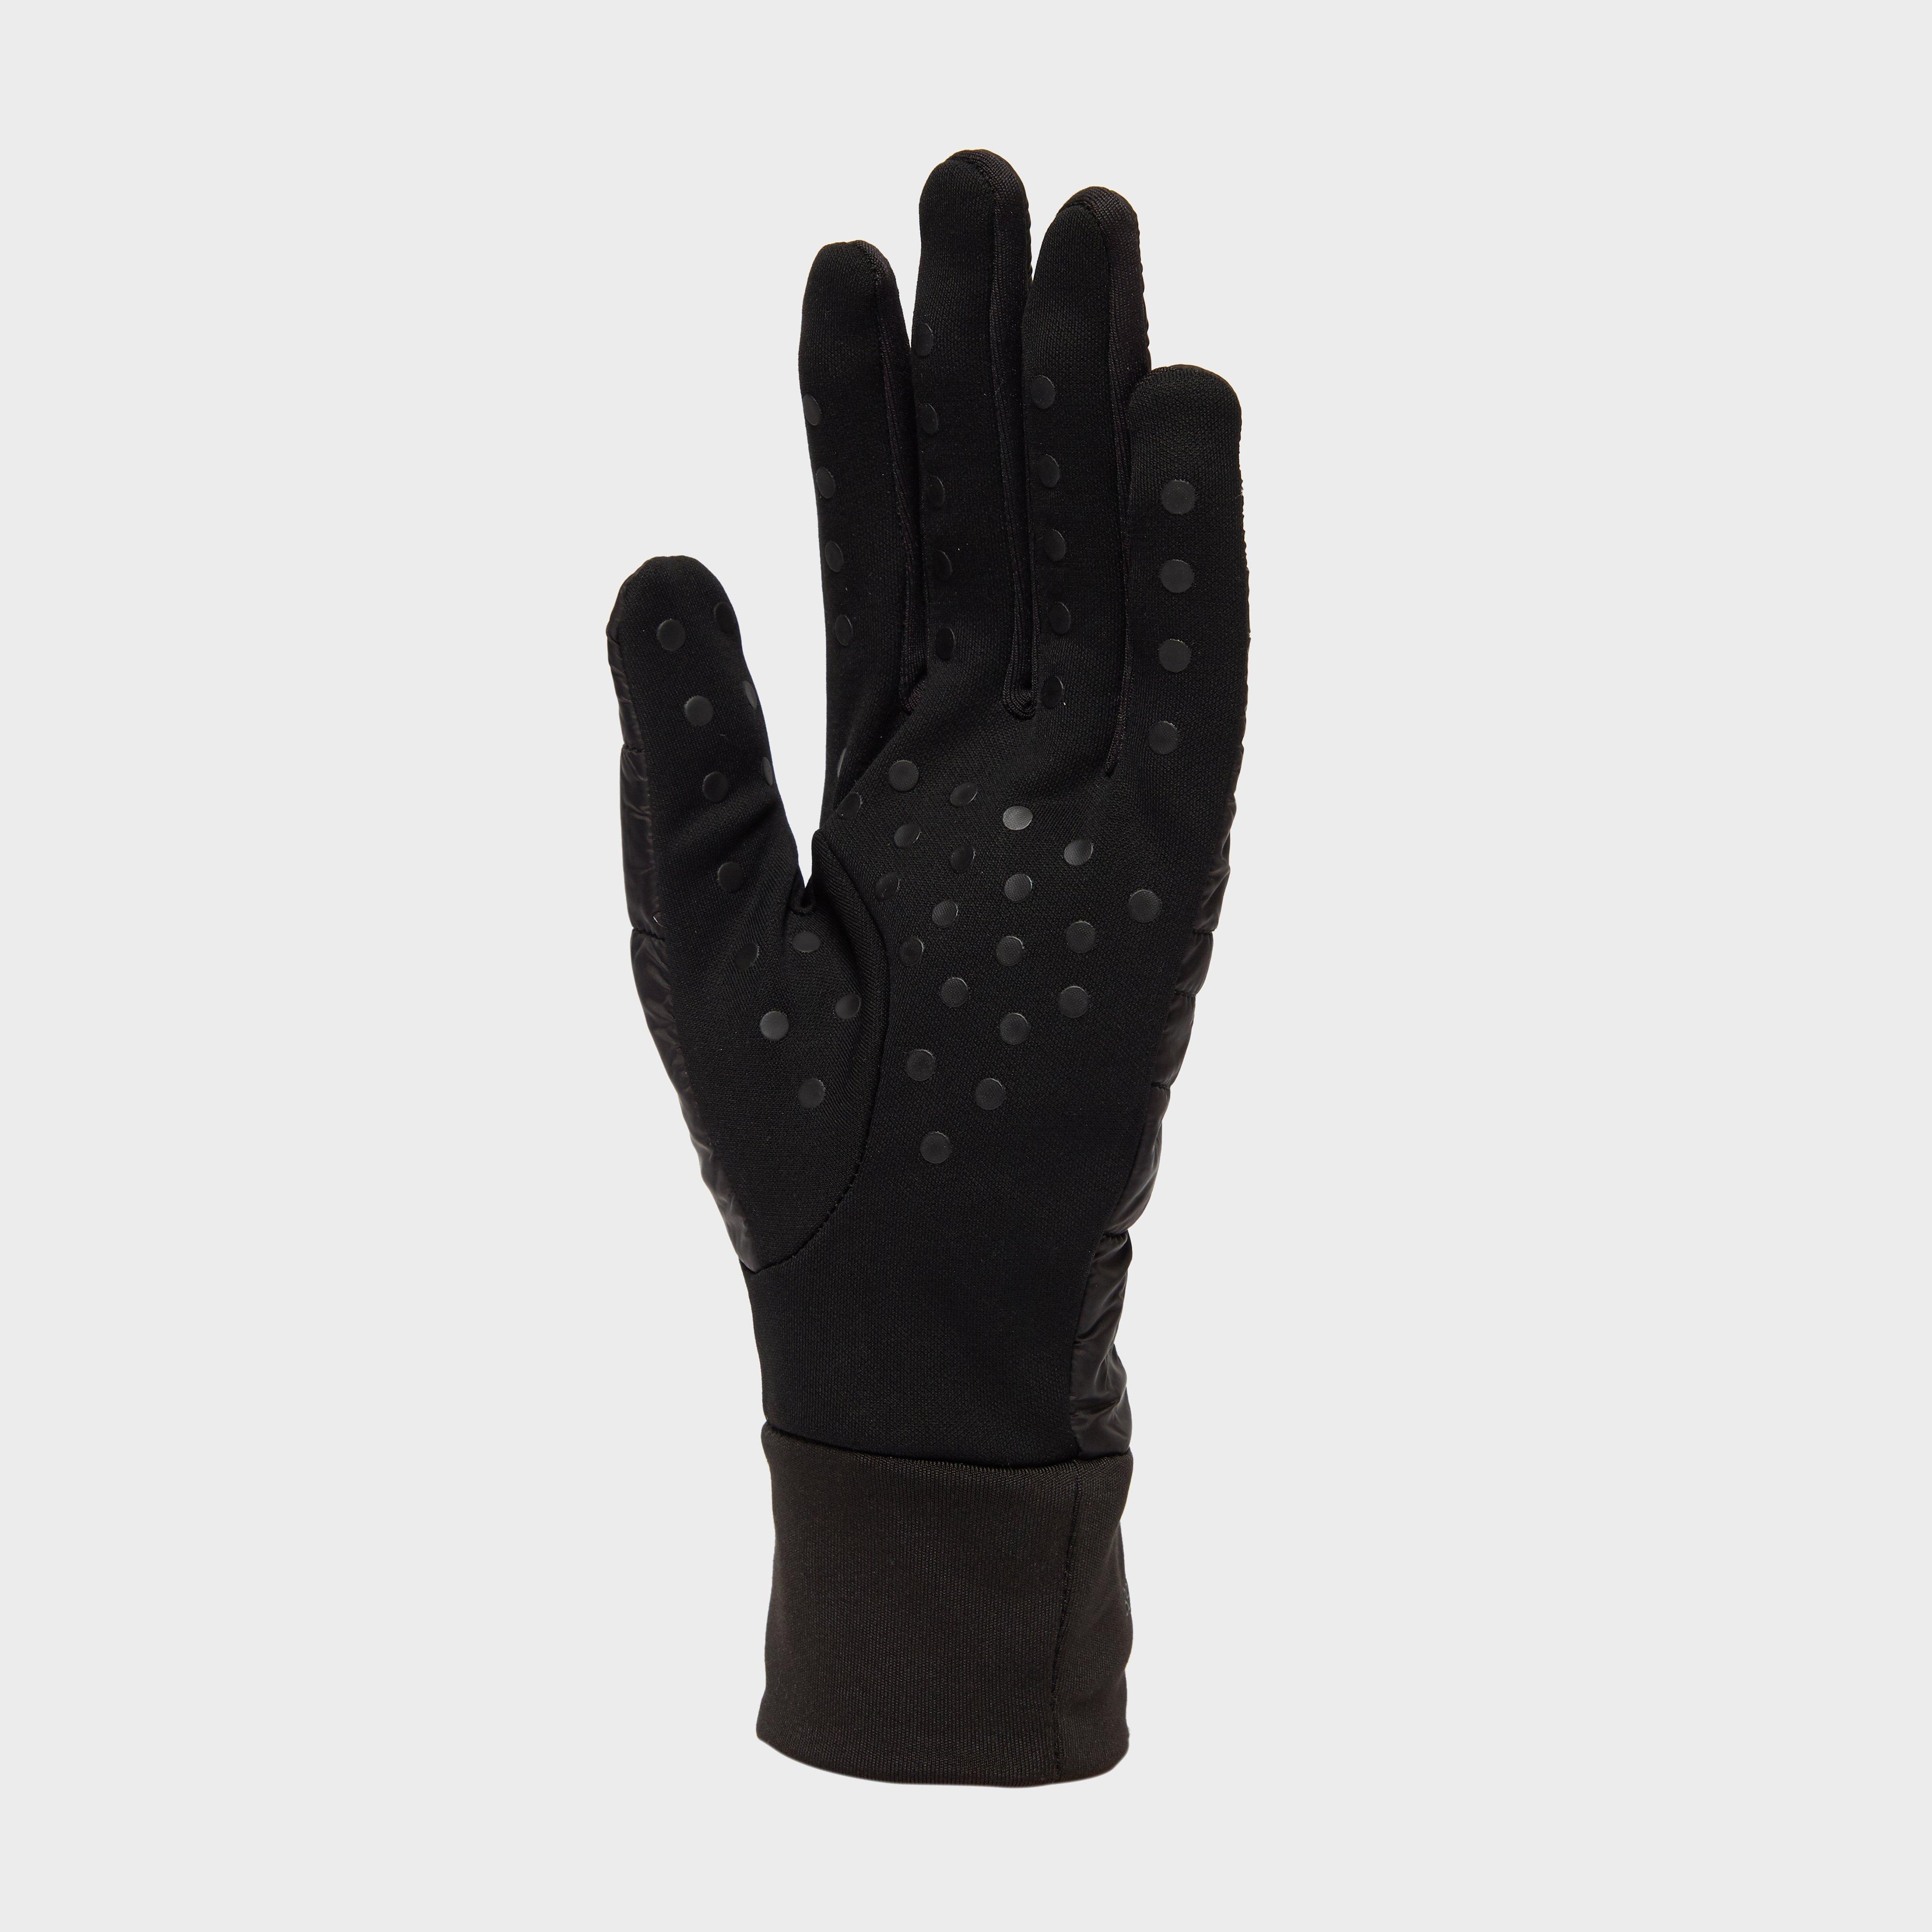 Trekmates Women's Stretch Grip Hybrid Gloves Review